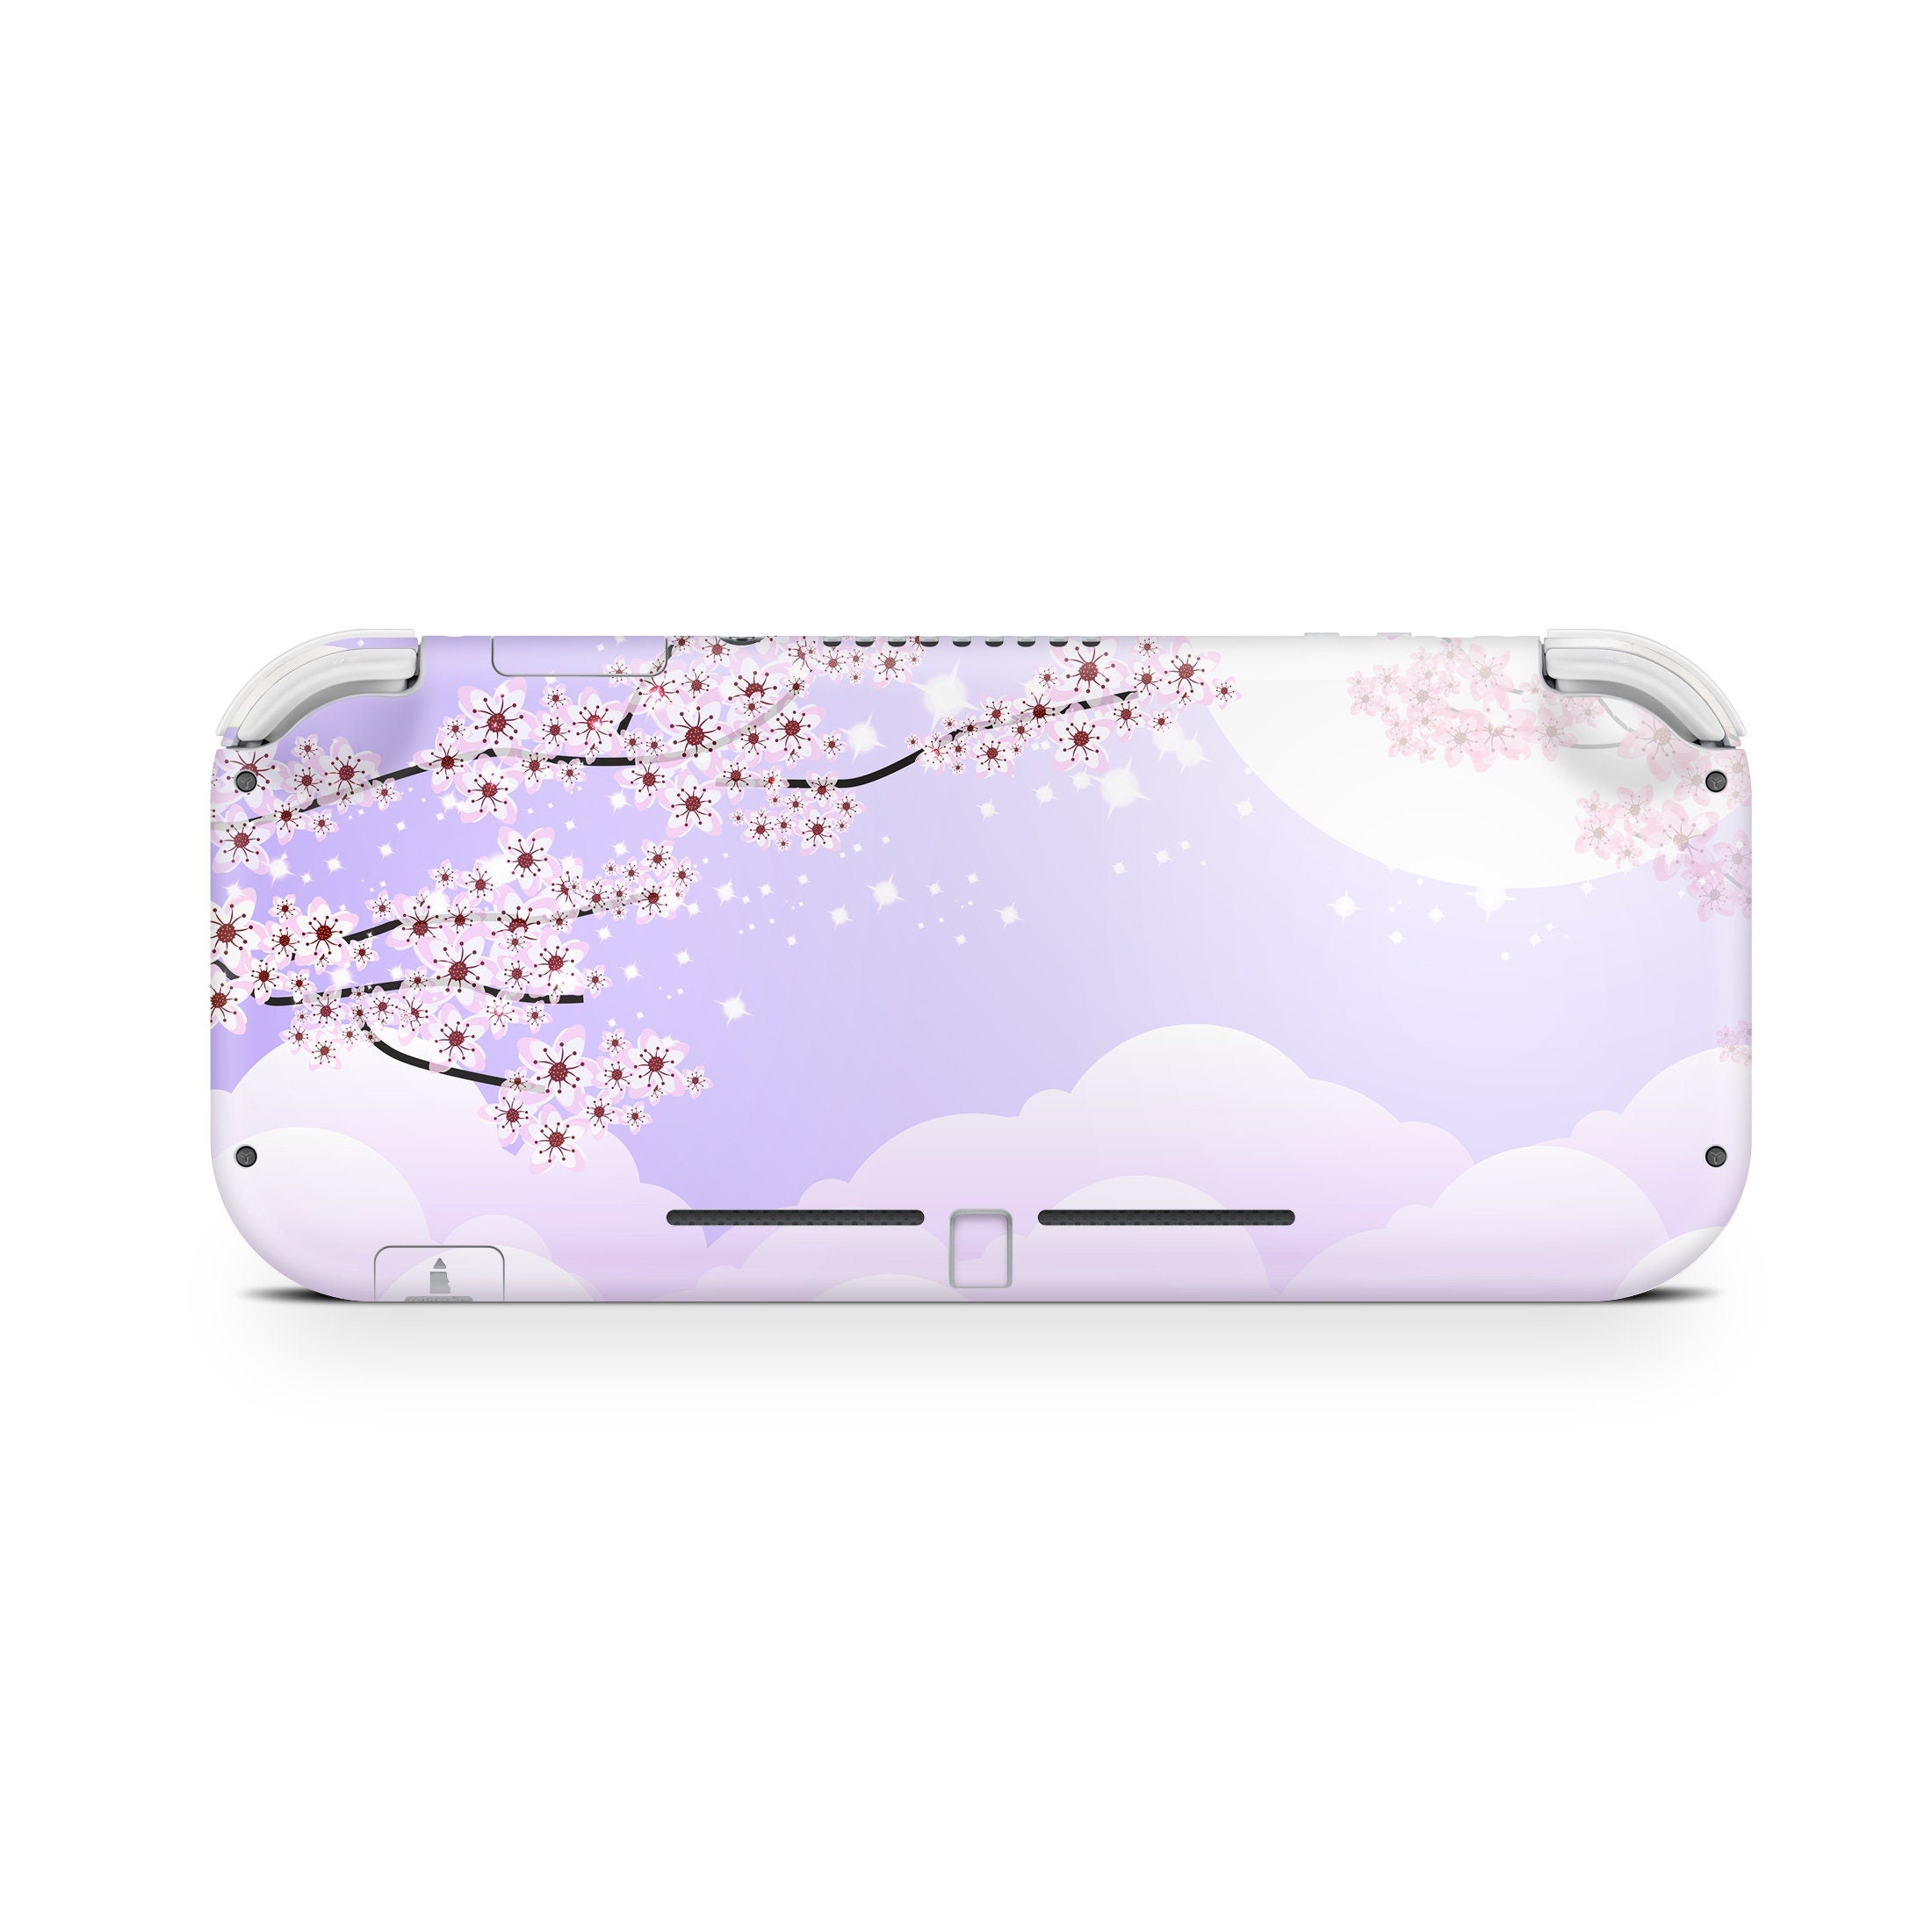 Nintendo switch Lite skin sakura , Purple Lilac Cherry blossom